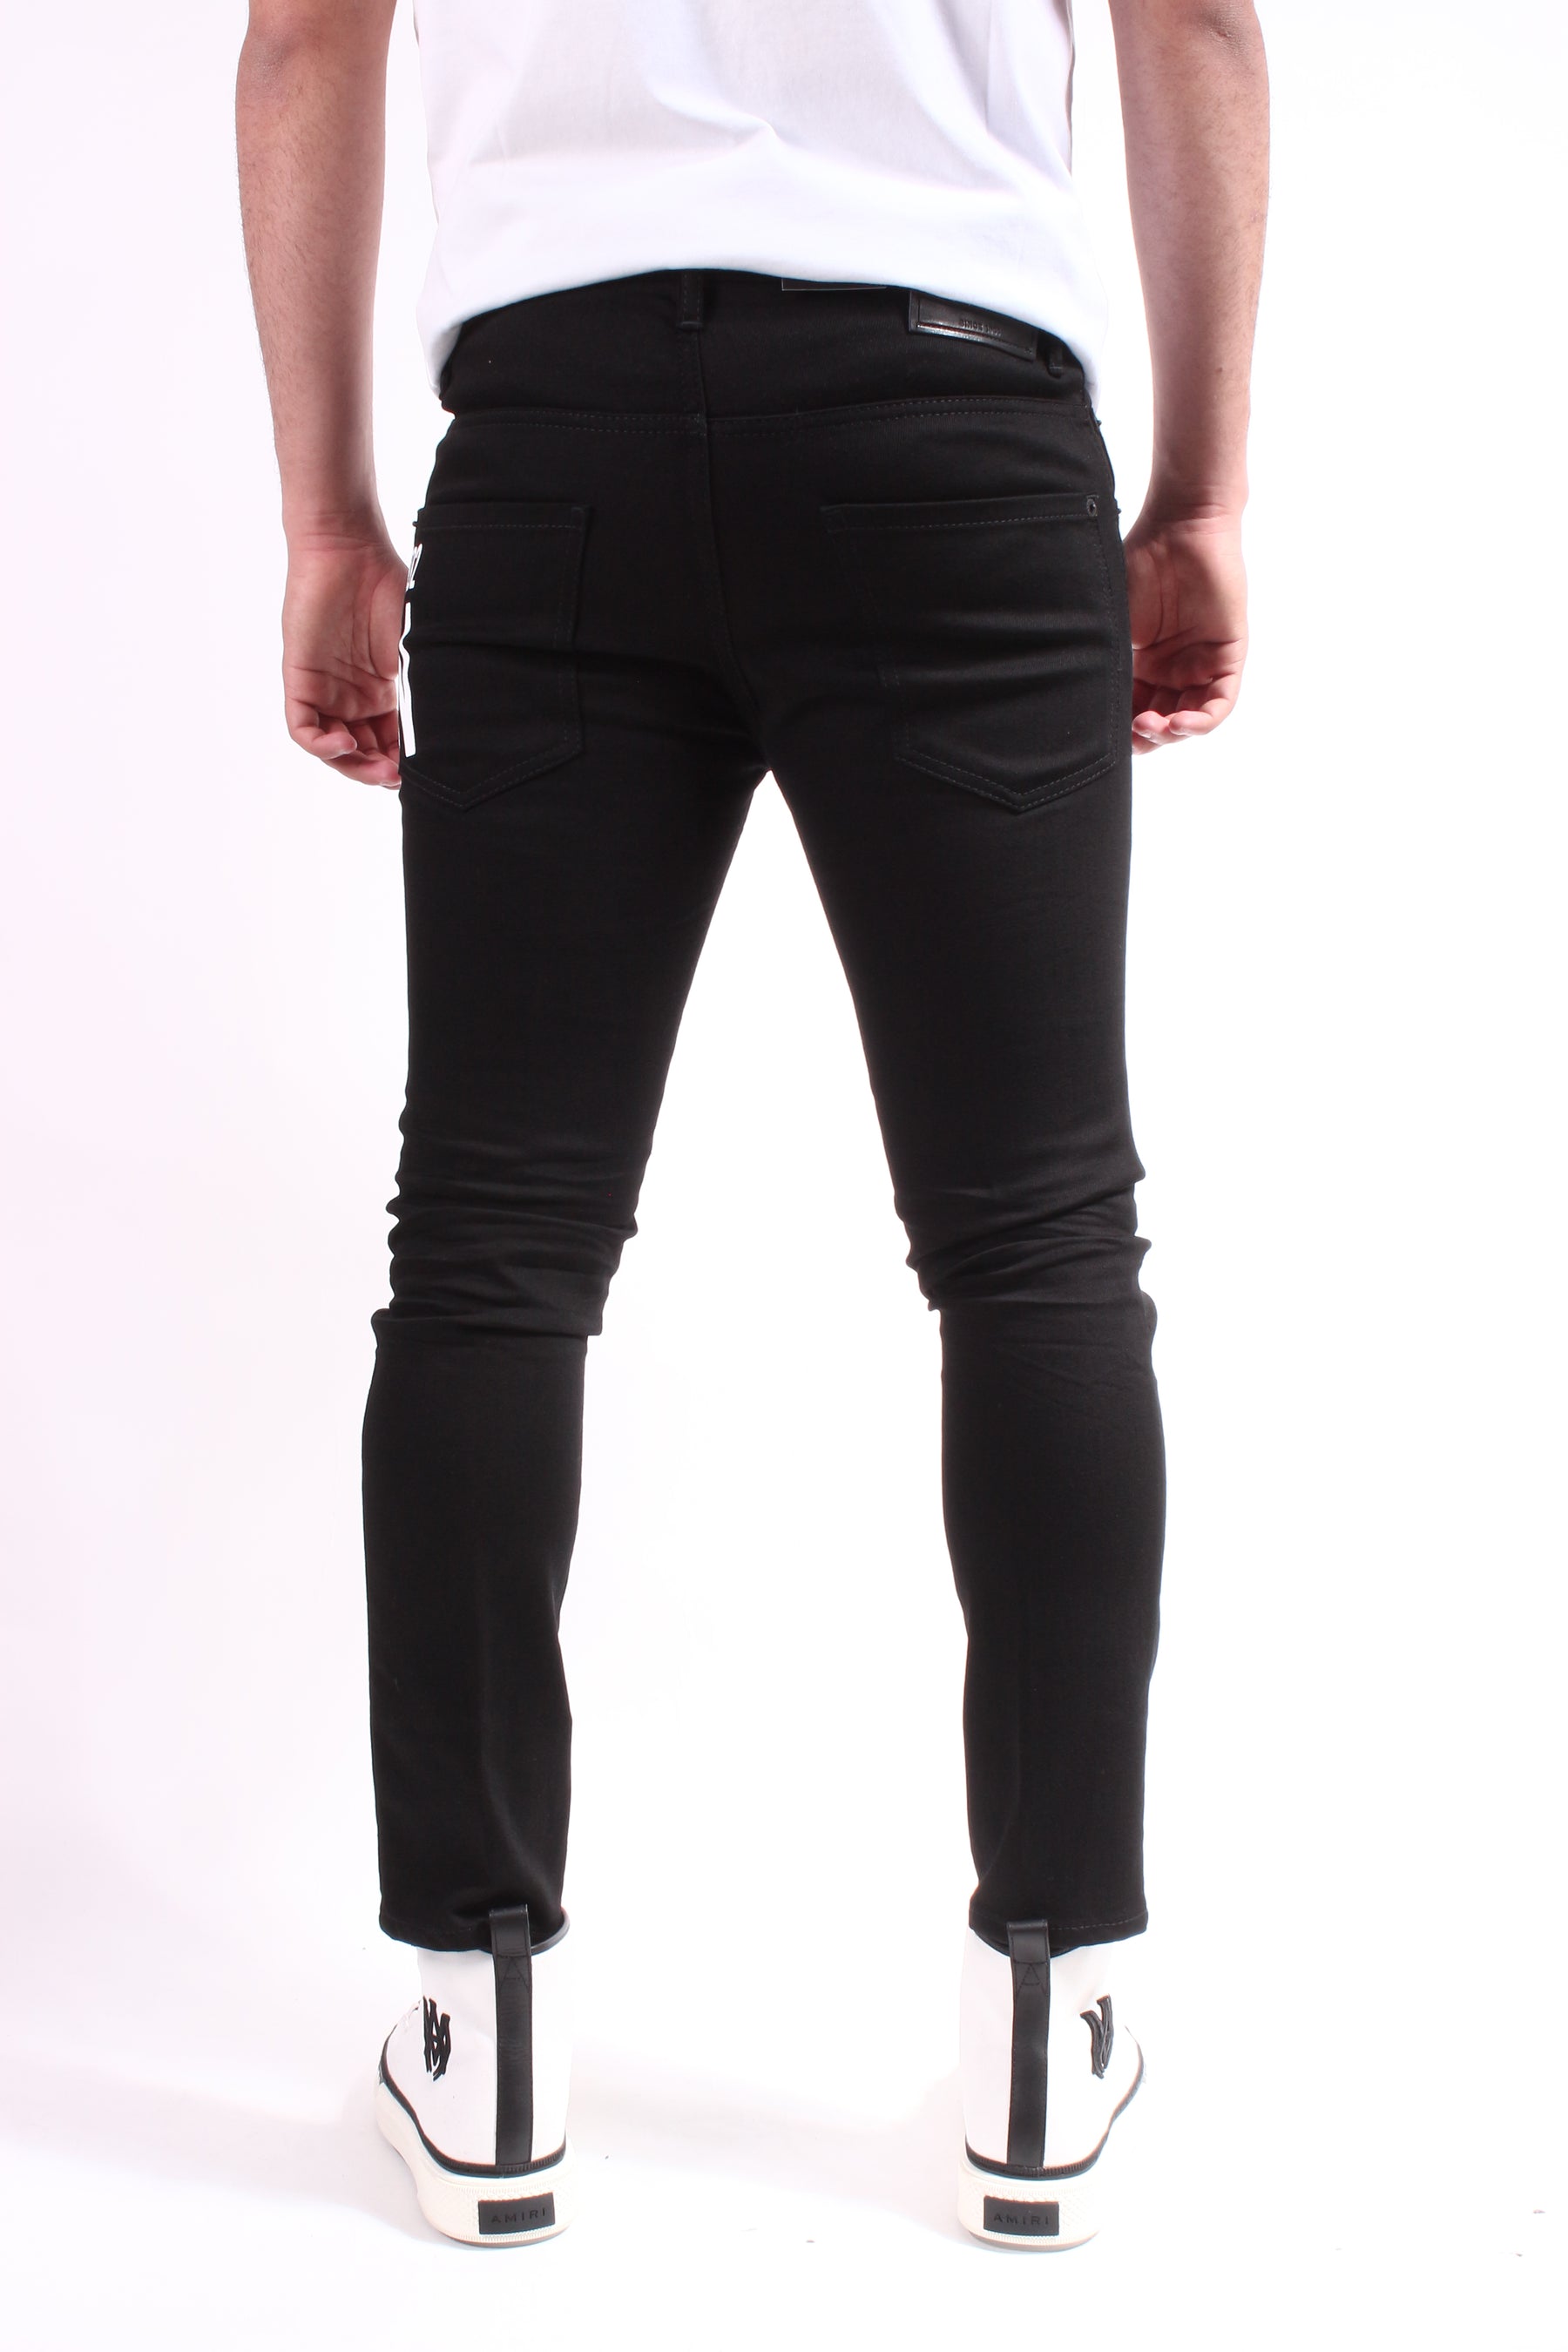 DSQUARED2 Black Icon Skater Jeans